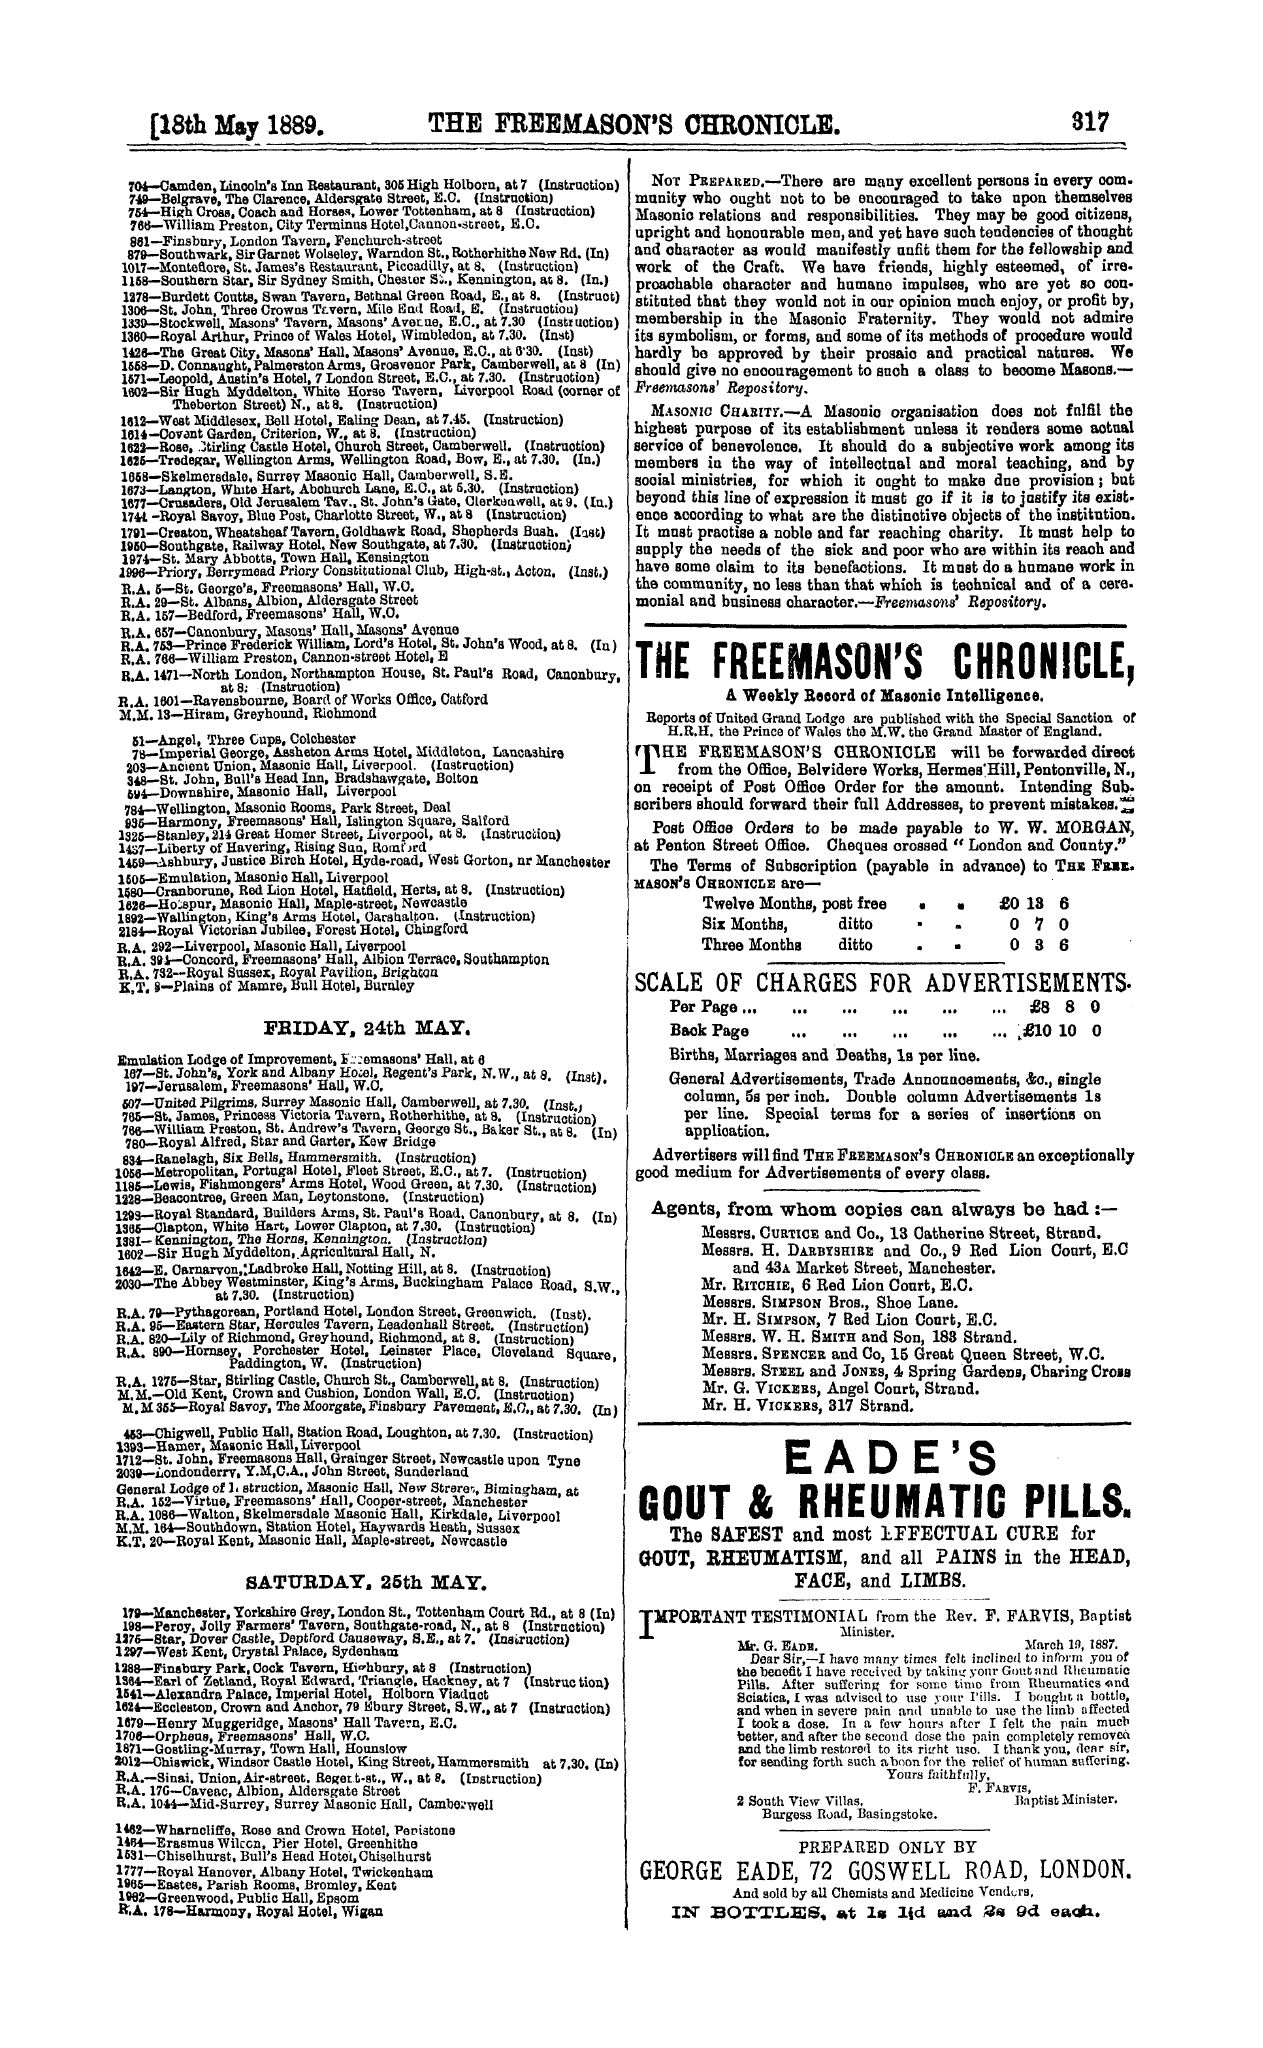 The Freemason's Chronicle: 1889-05-18: 13